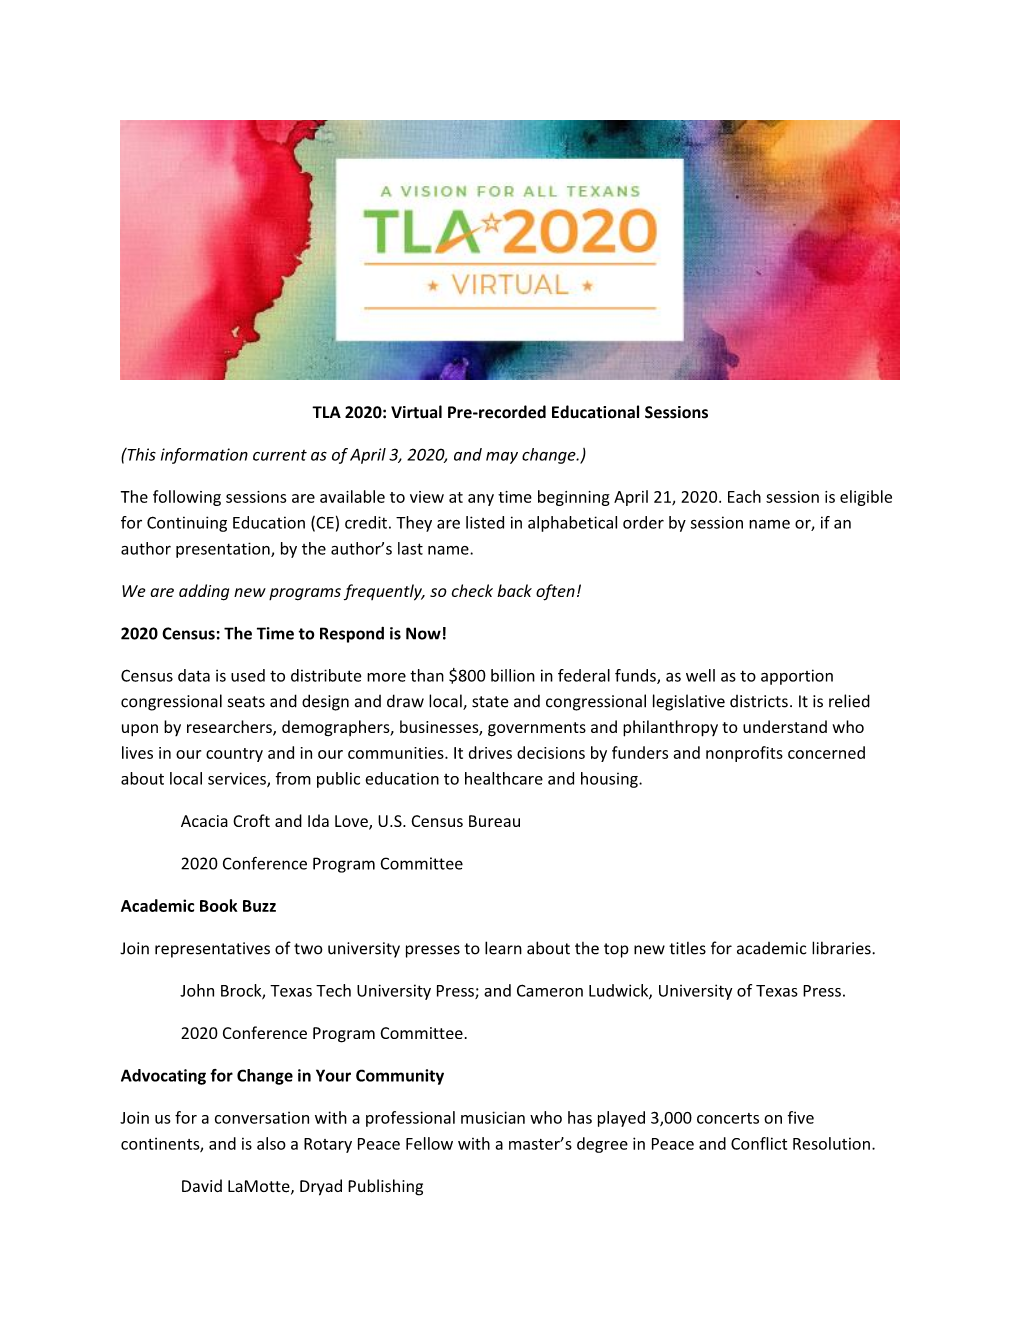 TLA 2020: Virtual Pre-Recorded Educational Sessions